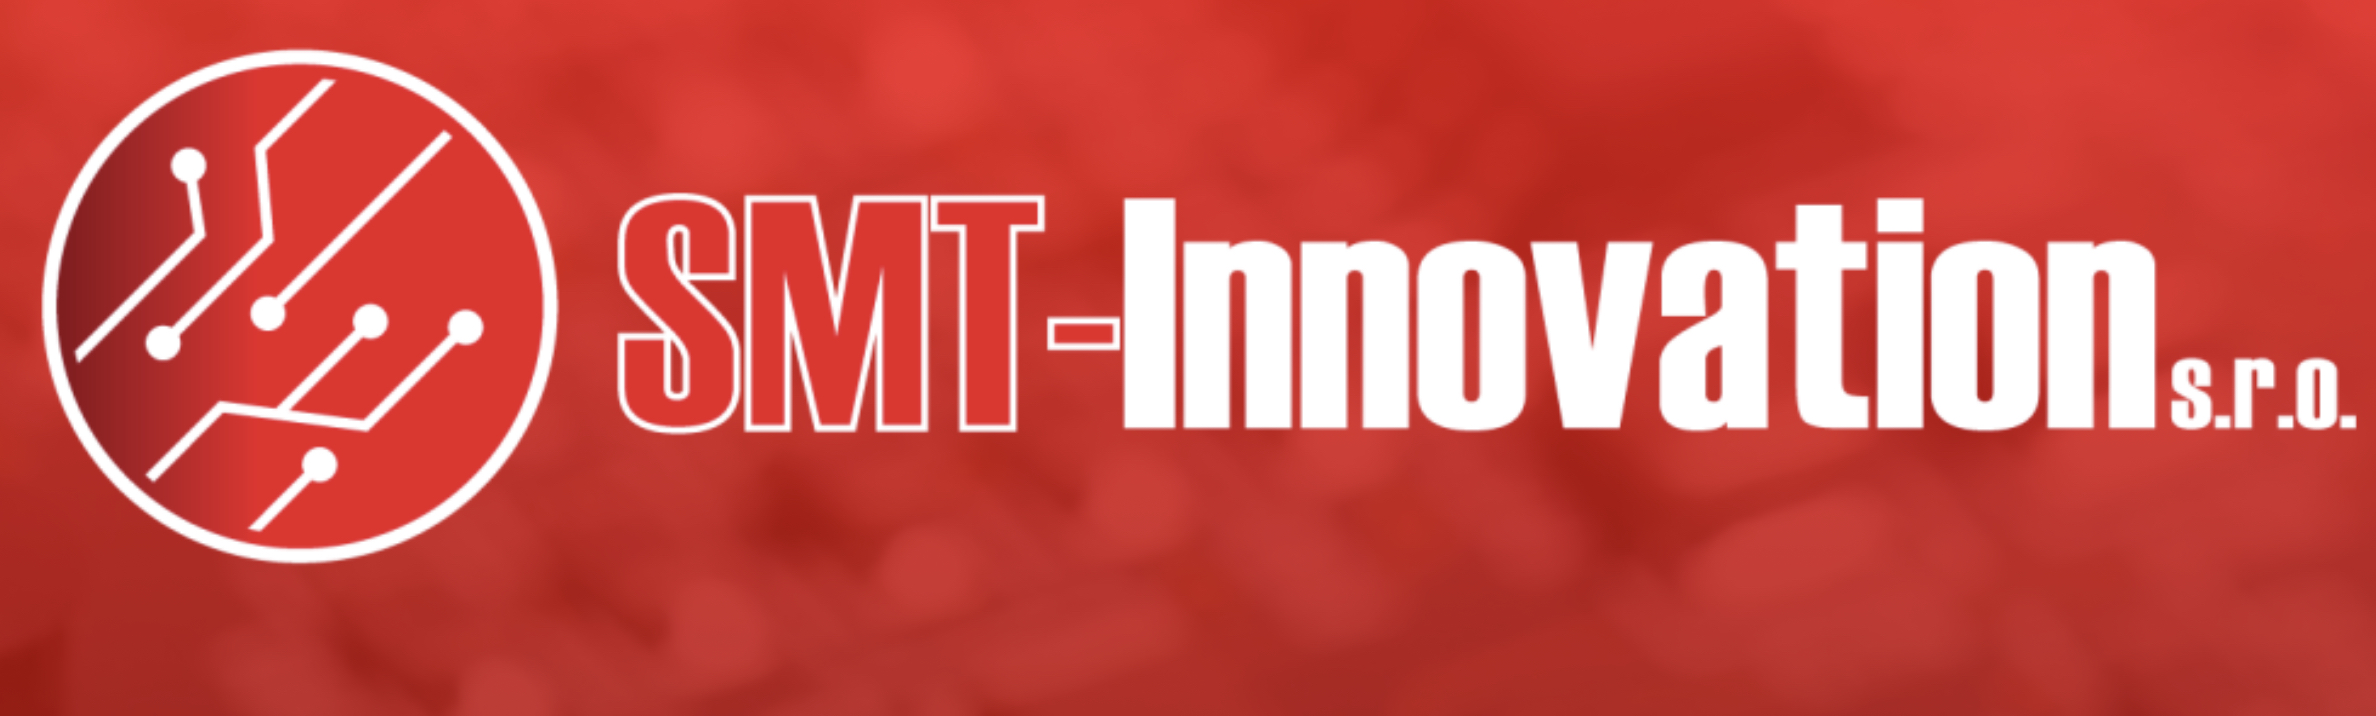 SMT-Innovation s.r.o.